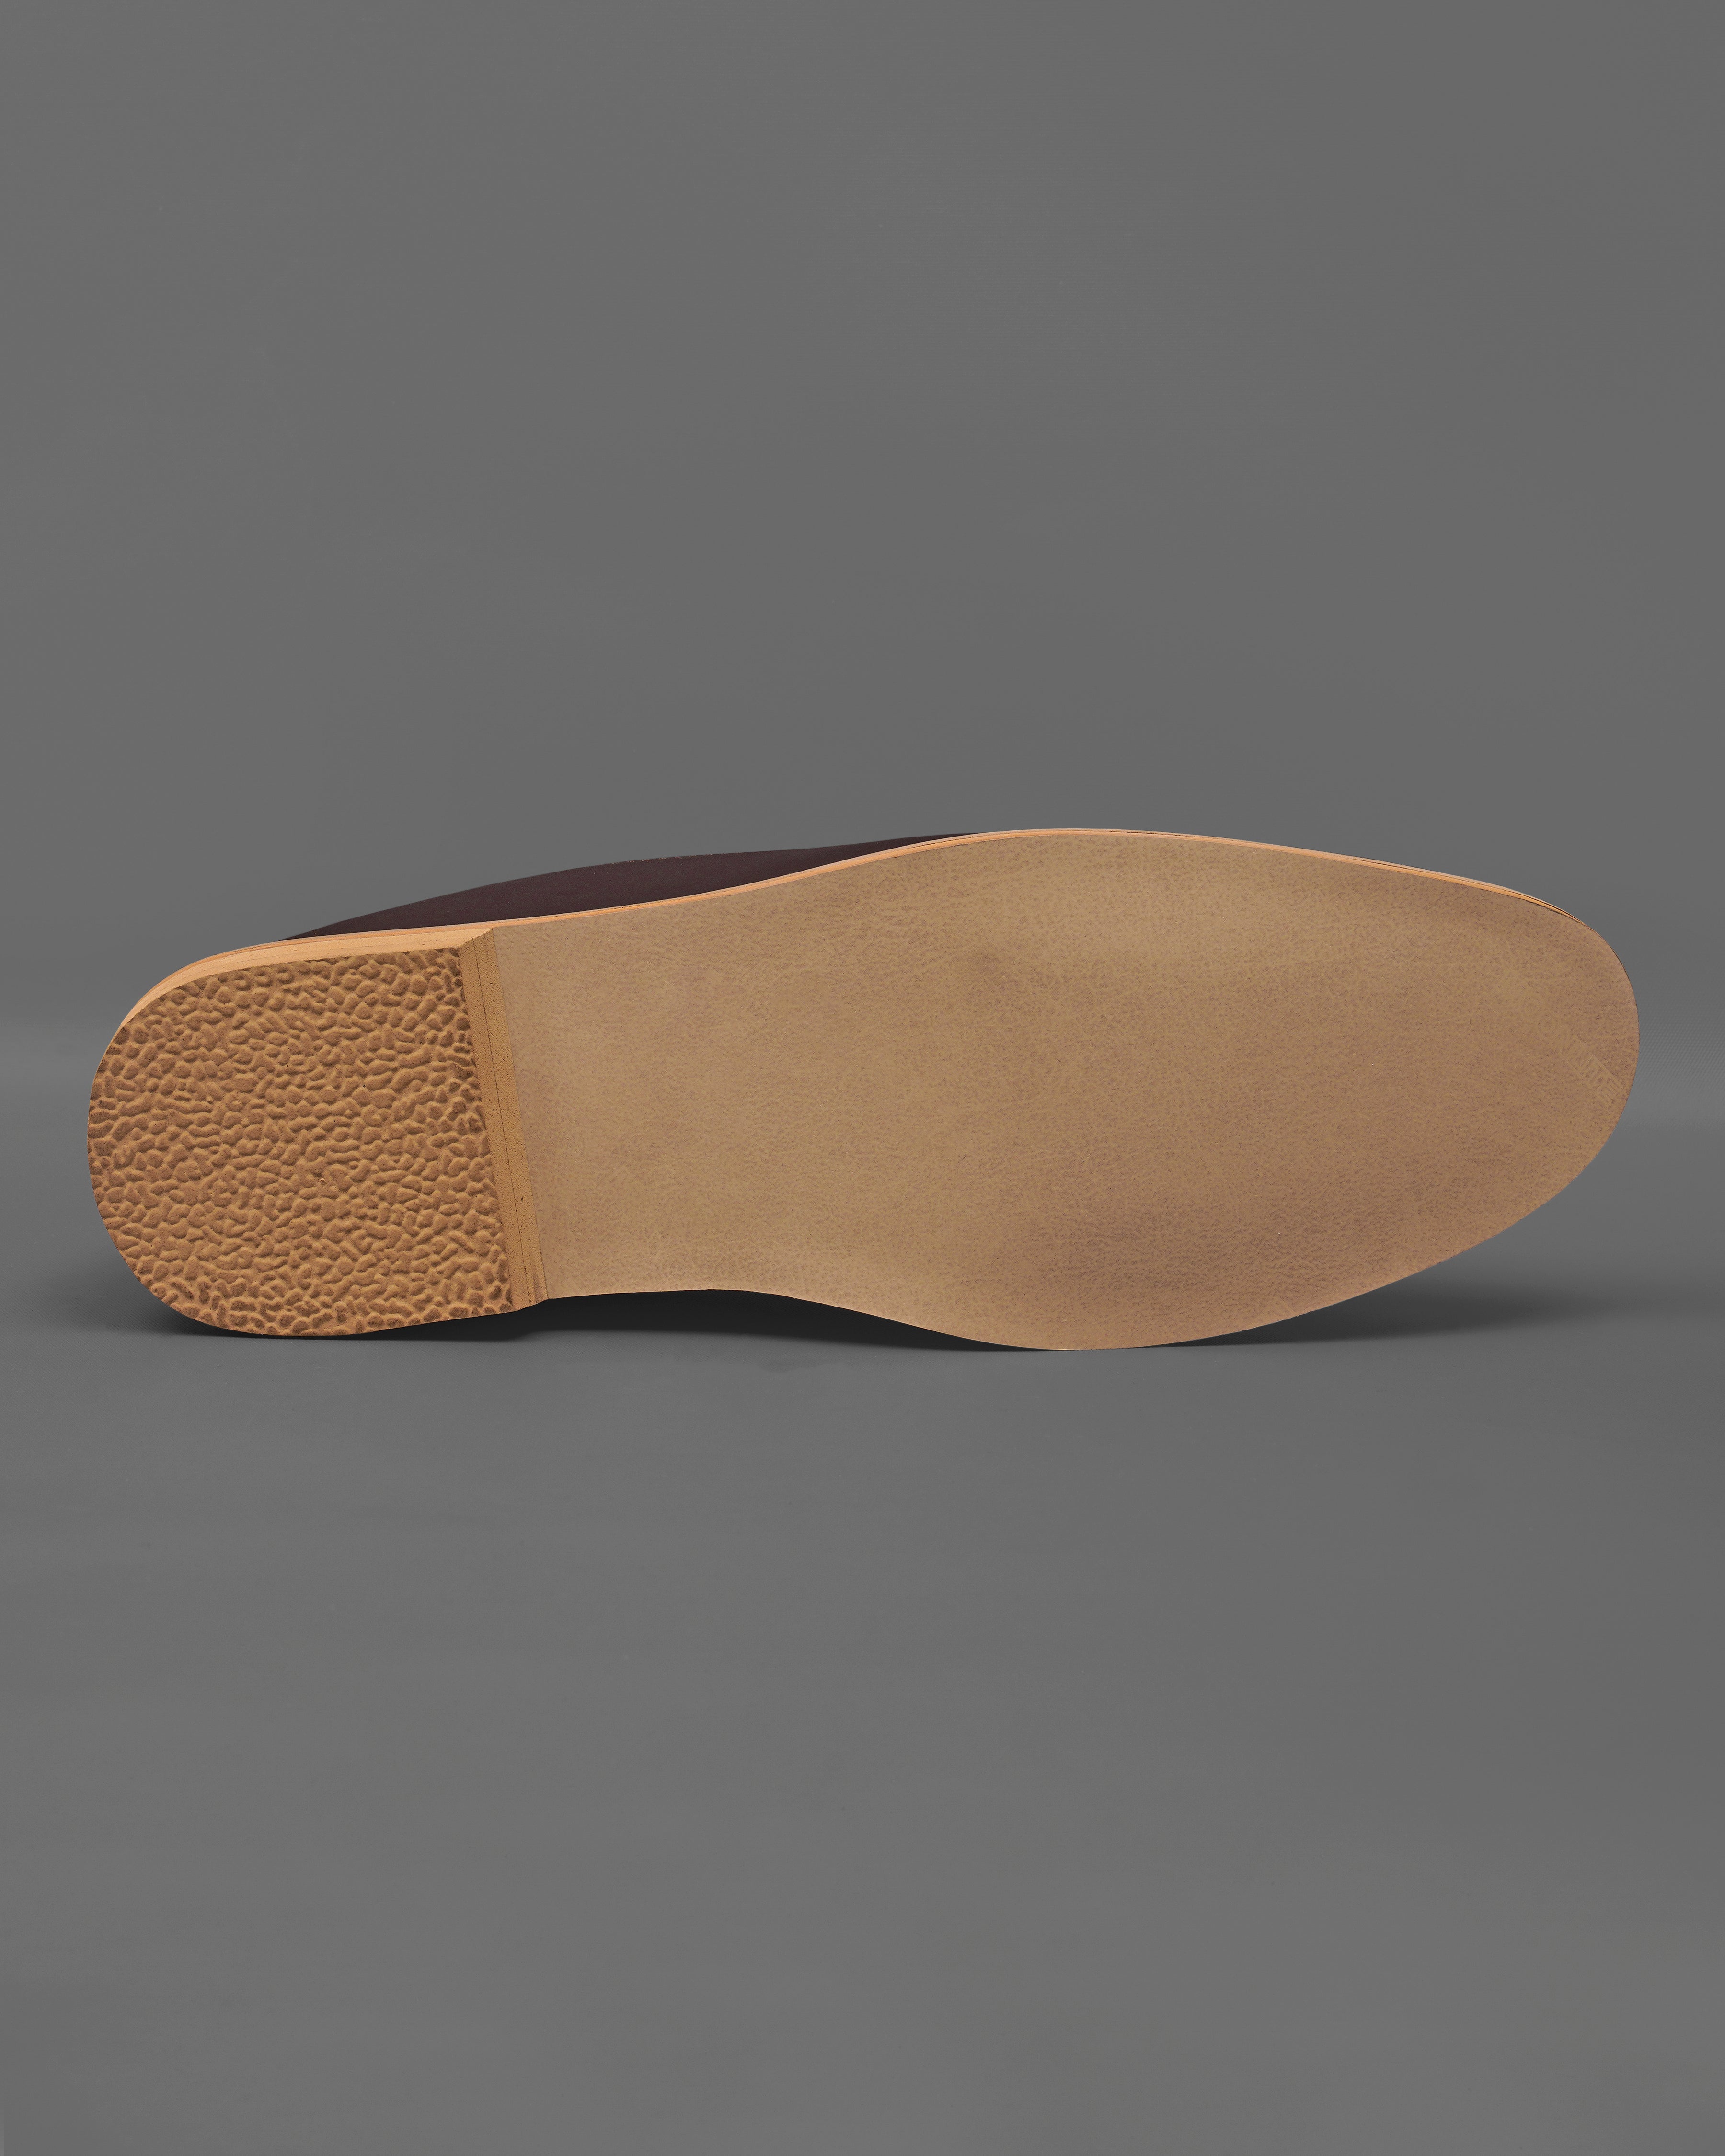 Dark Brown Golden Zardosi Vegan Leather Hand stitched Slip-On Shoes FT091-6, FT091-7, FT091-8, FT091-9, FT091-10, FT091-11